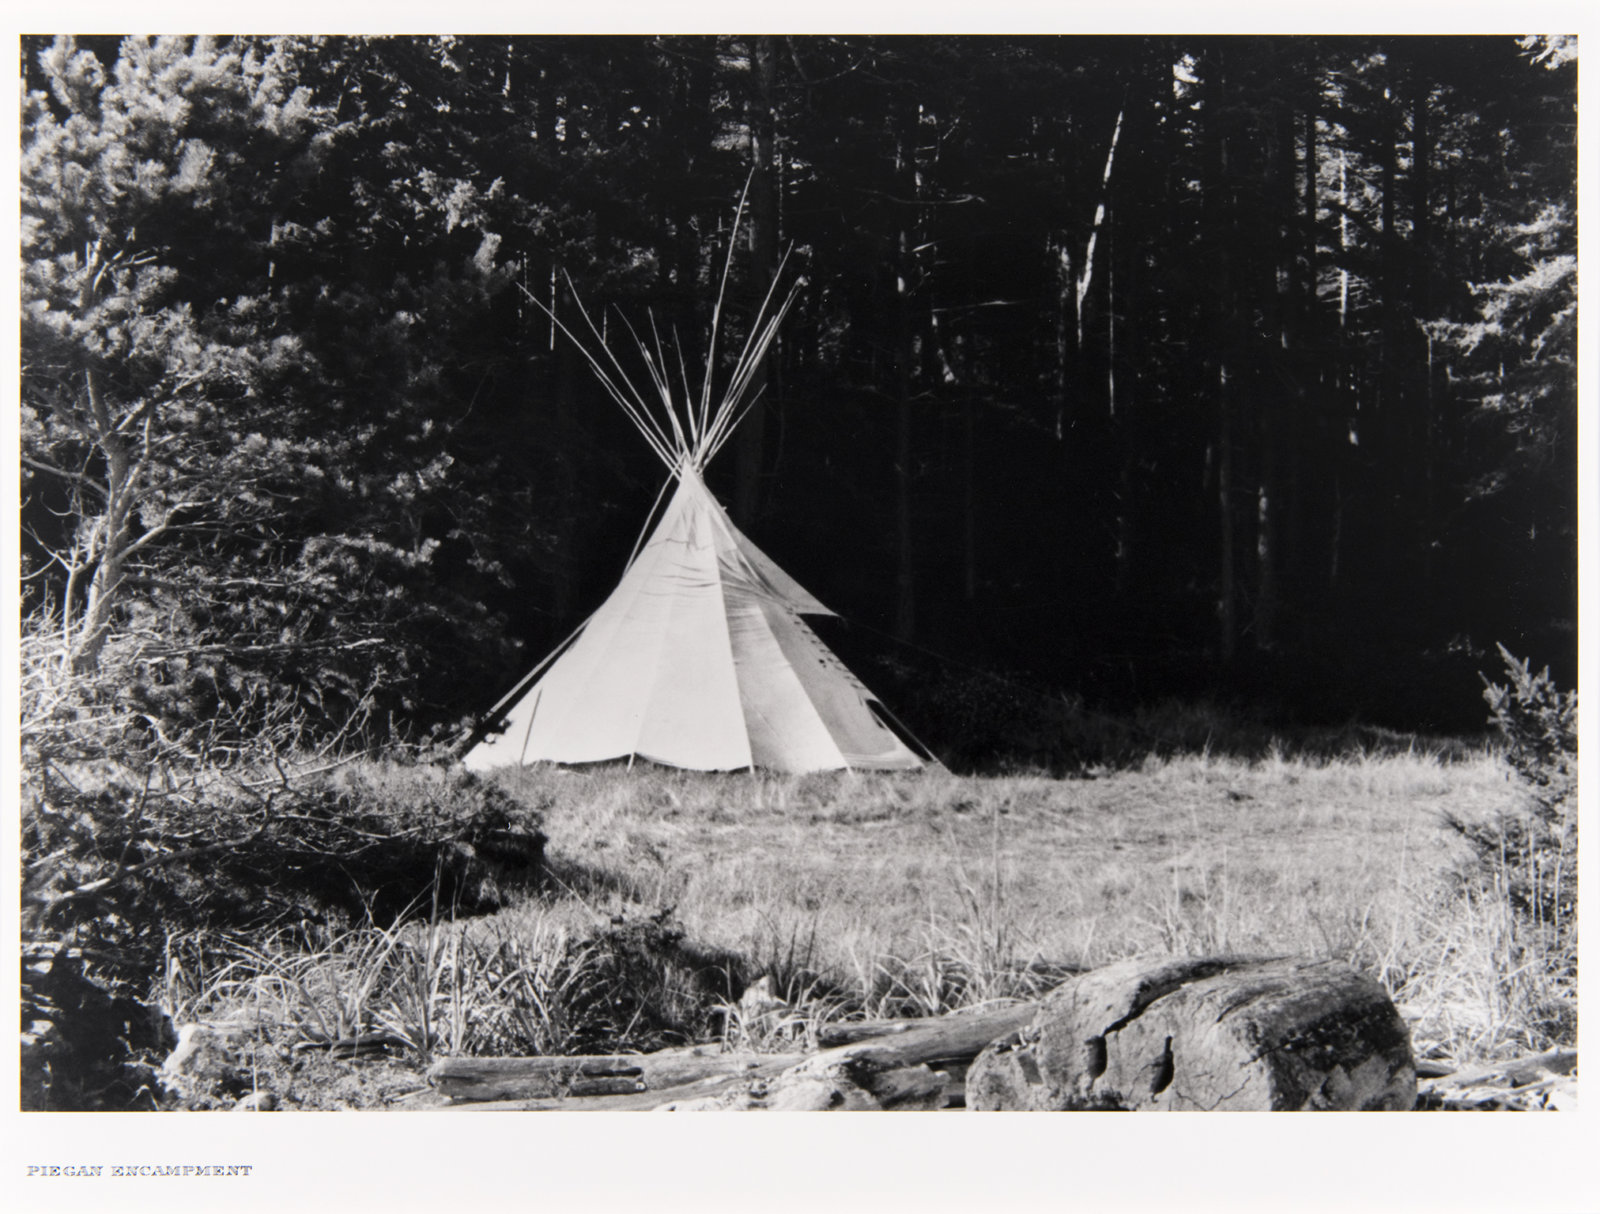 Liz Magor, Piegan Encampment from Field Work, 1989, selenium toned silver gelatin print, 16 x 20 in. (41 x 51 cm)